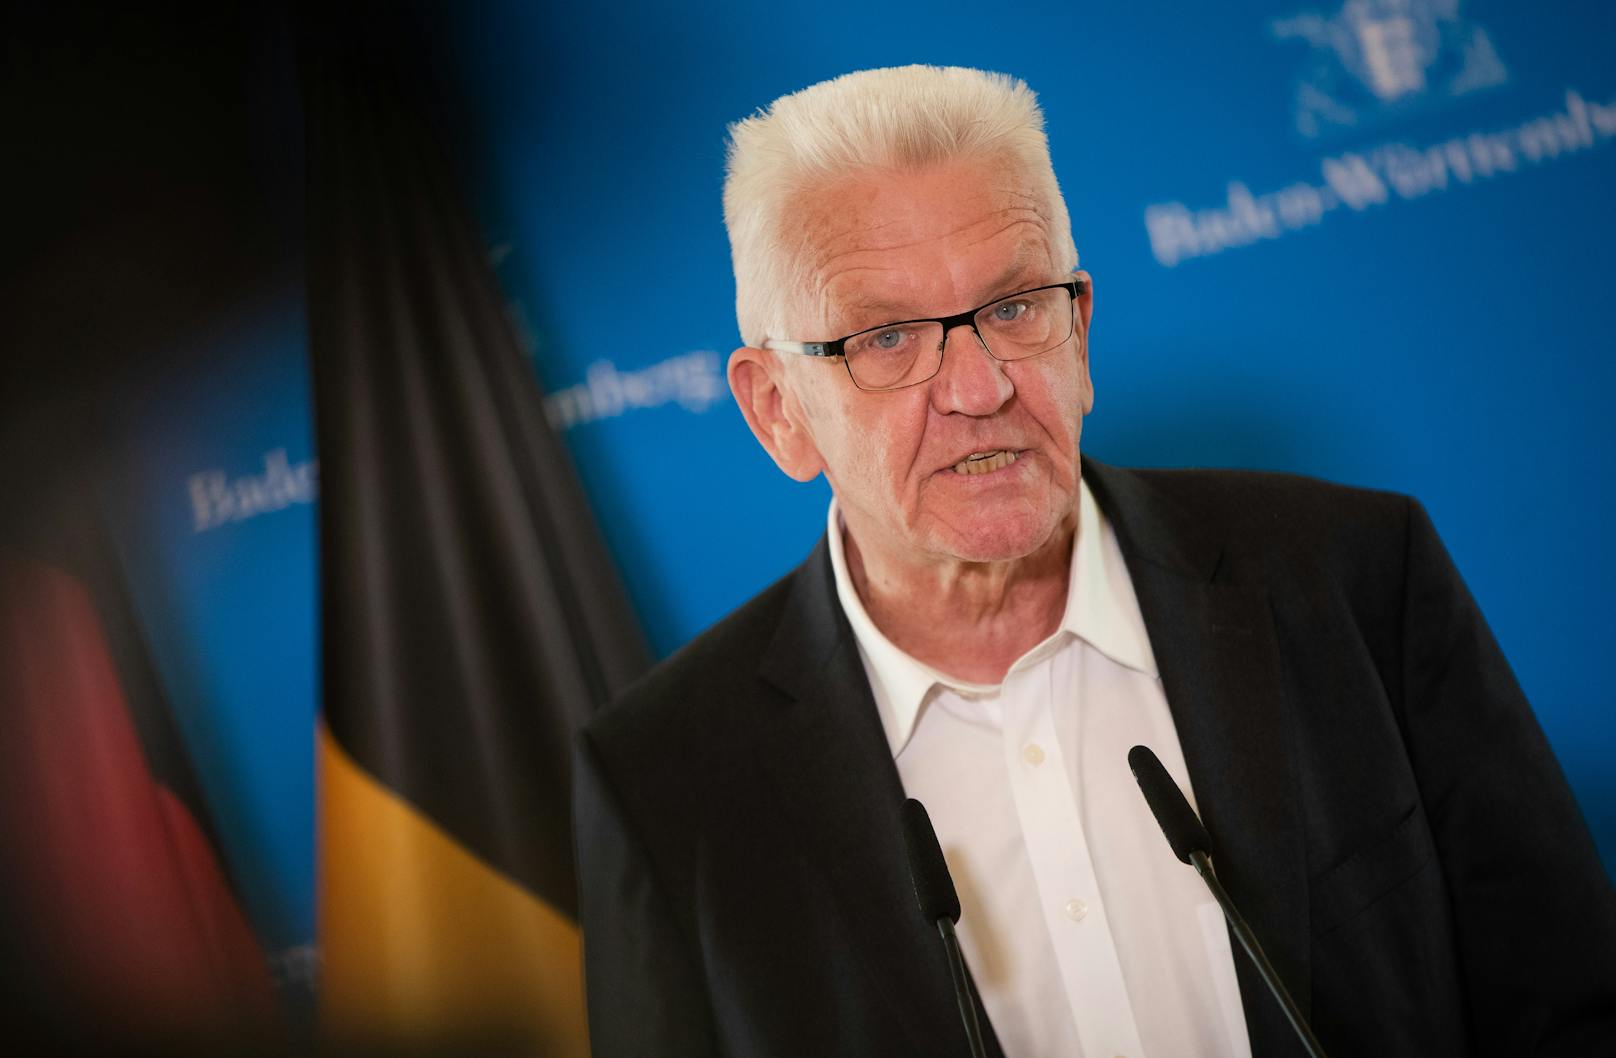 Winfried Kretschmann bei einer Pressekonferenz am 27. August 2020